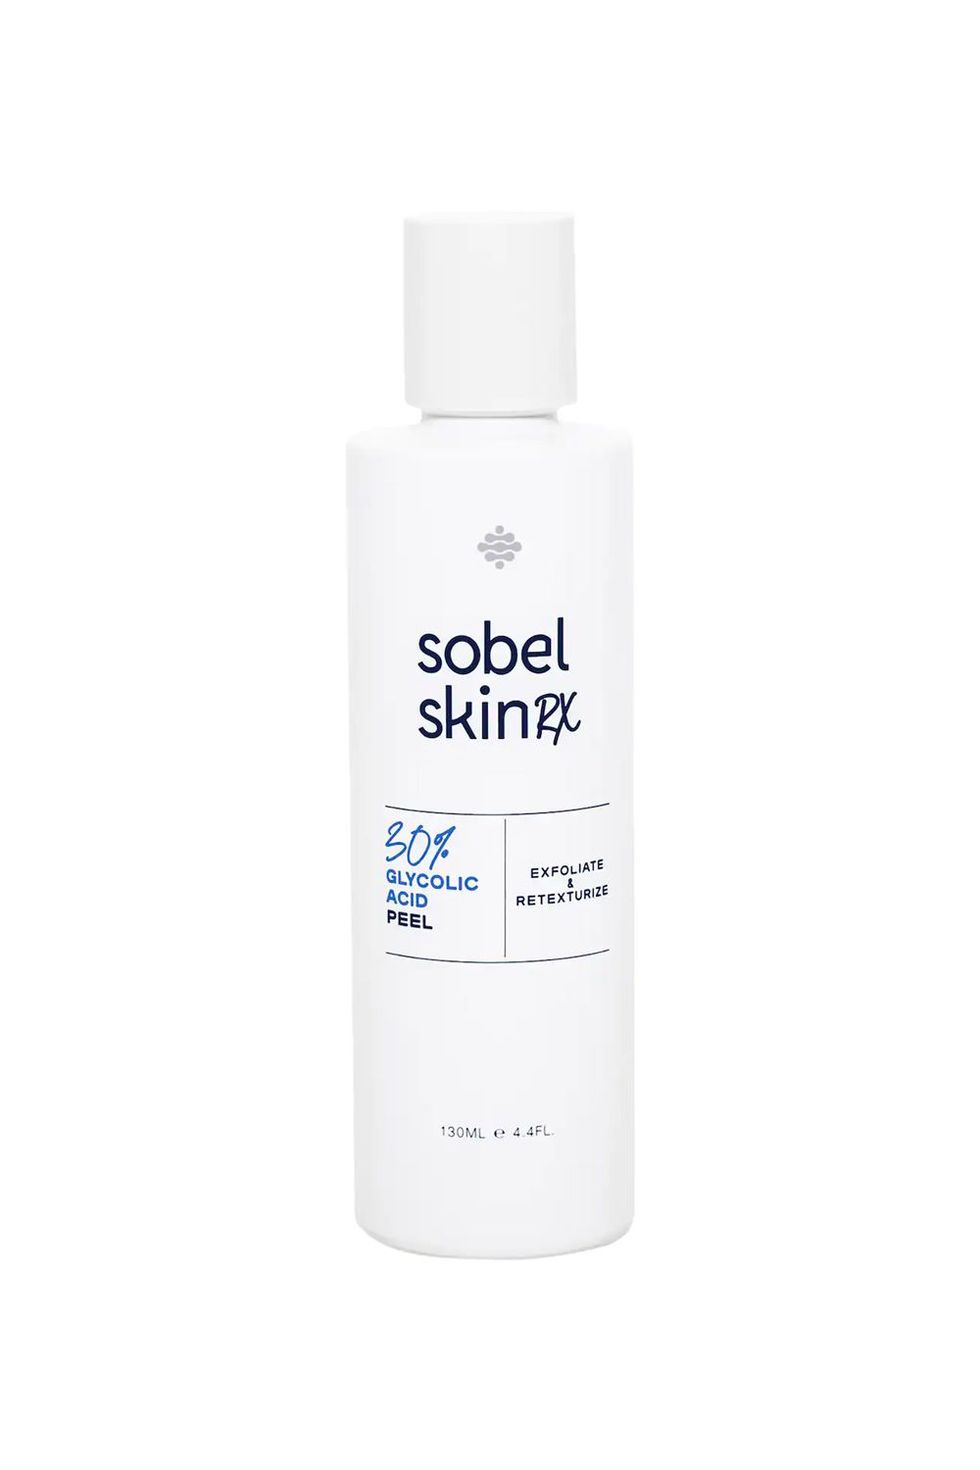 Sobel Skin Rx 30% Glycolic Acid Peel Concentrate